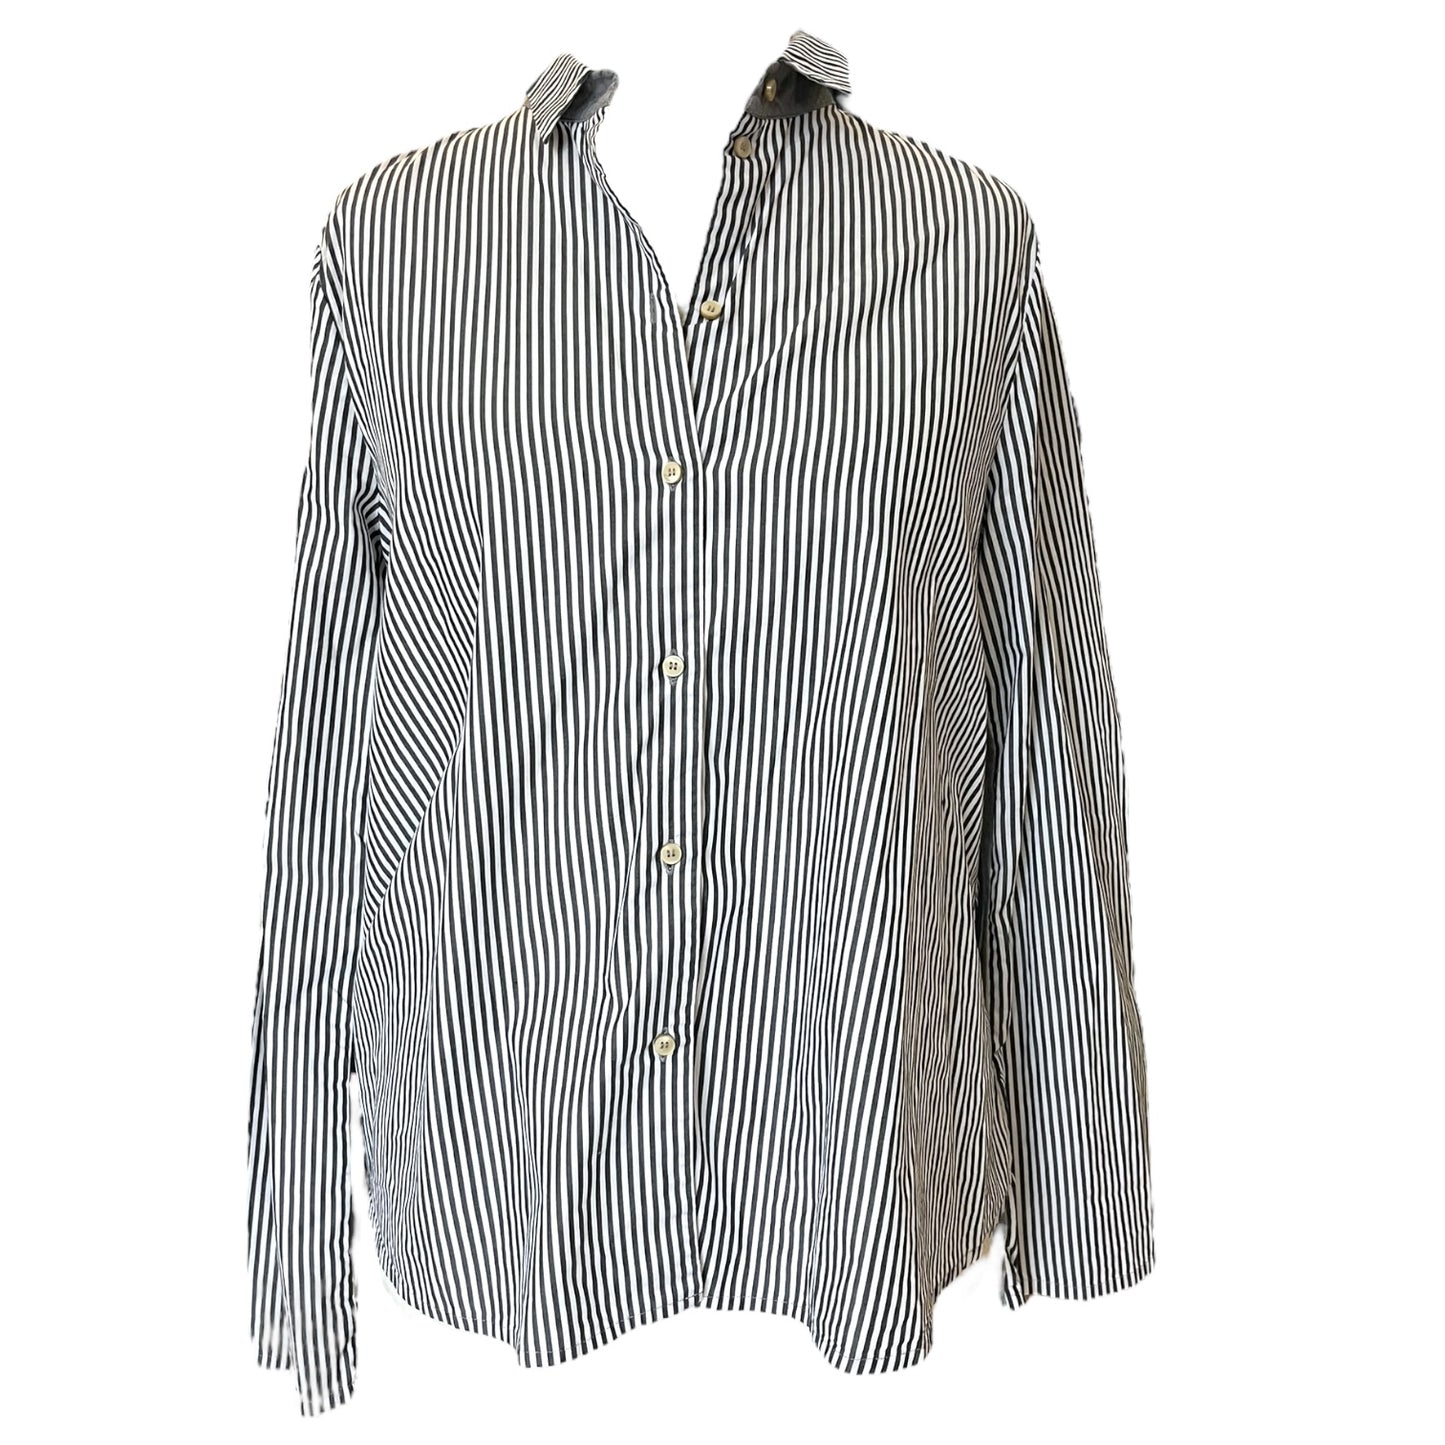 Annette Gortz White and Grey Stripe Shirt - 12